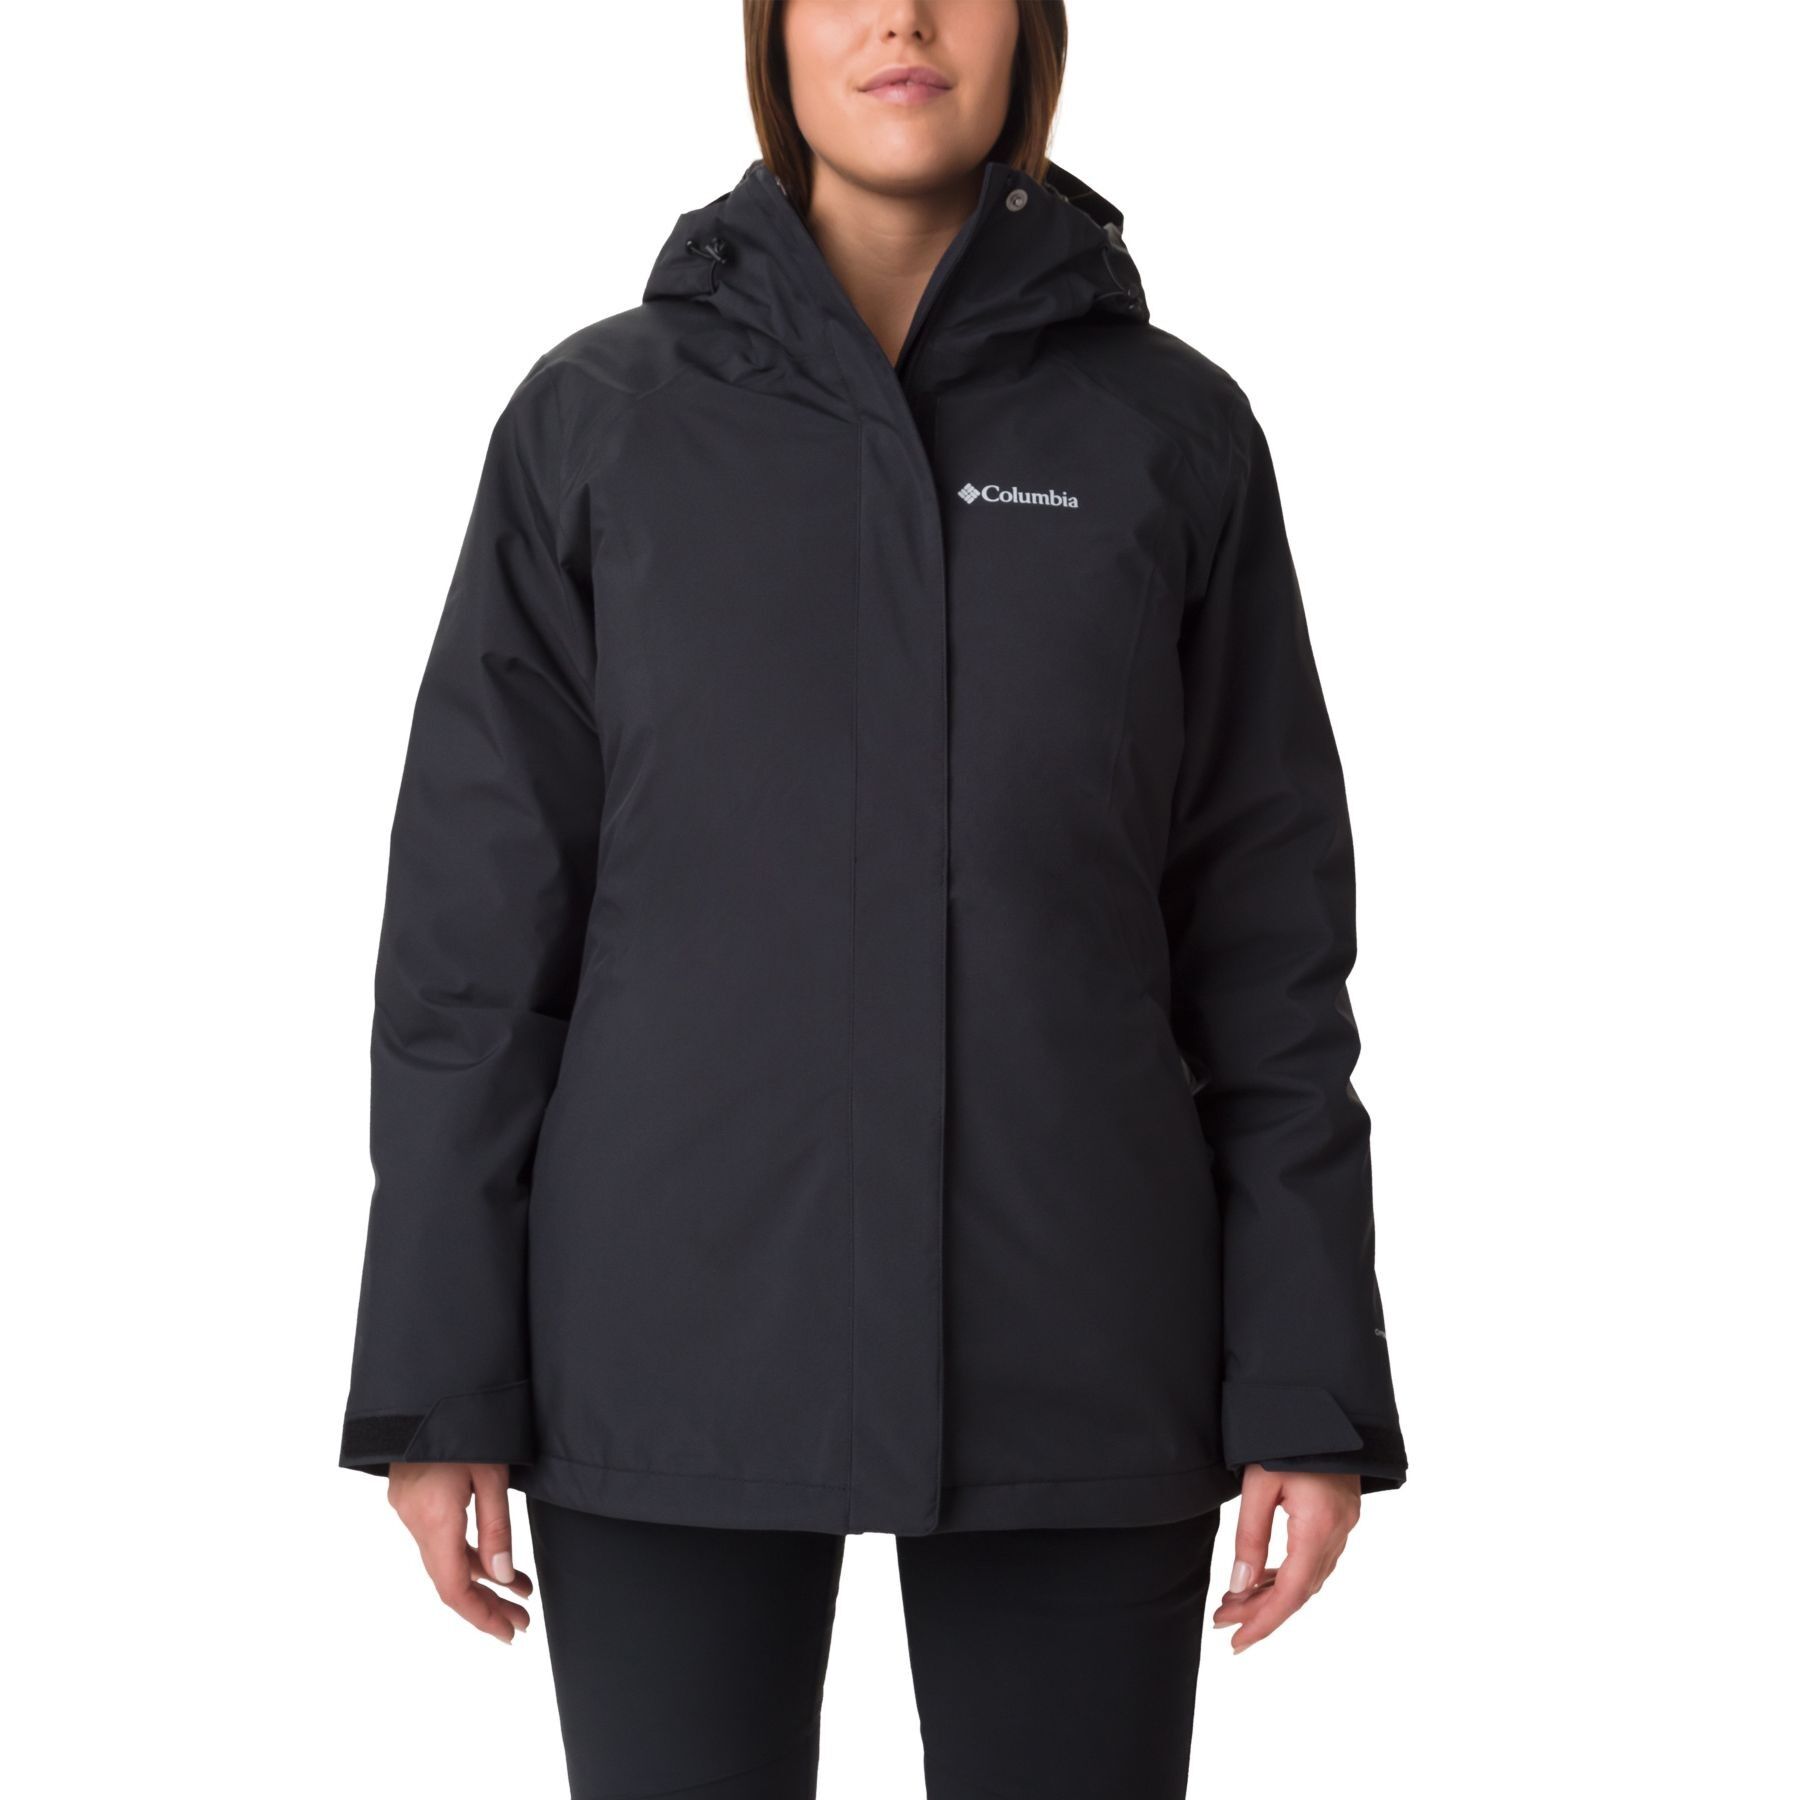 Columbia Tolt Track Interchange Jacket - Hardshell jacket - Women's